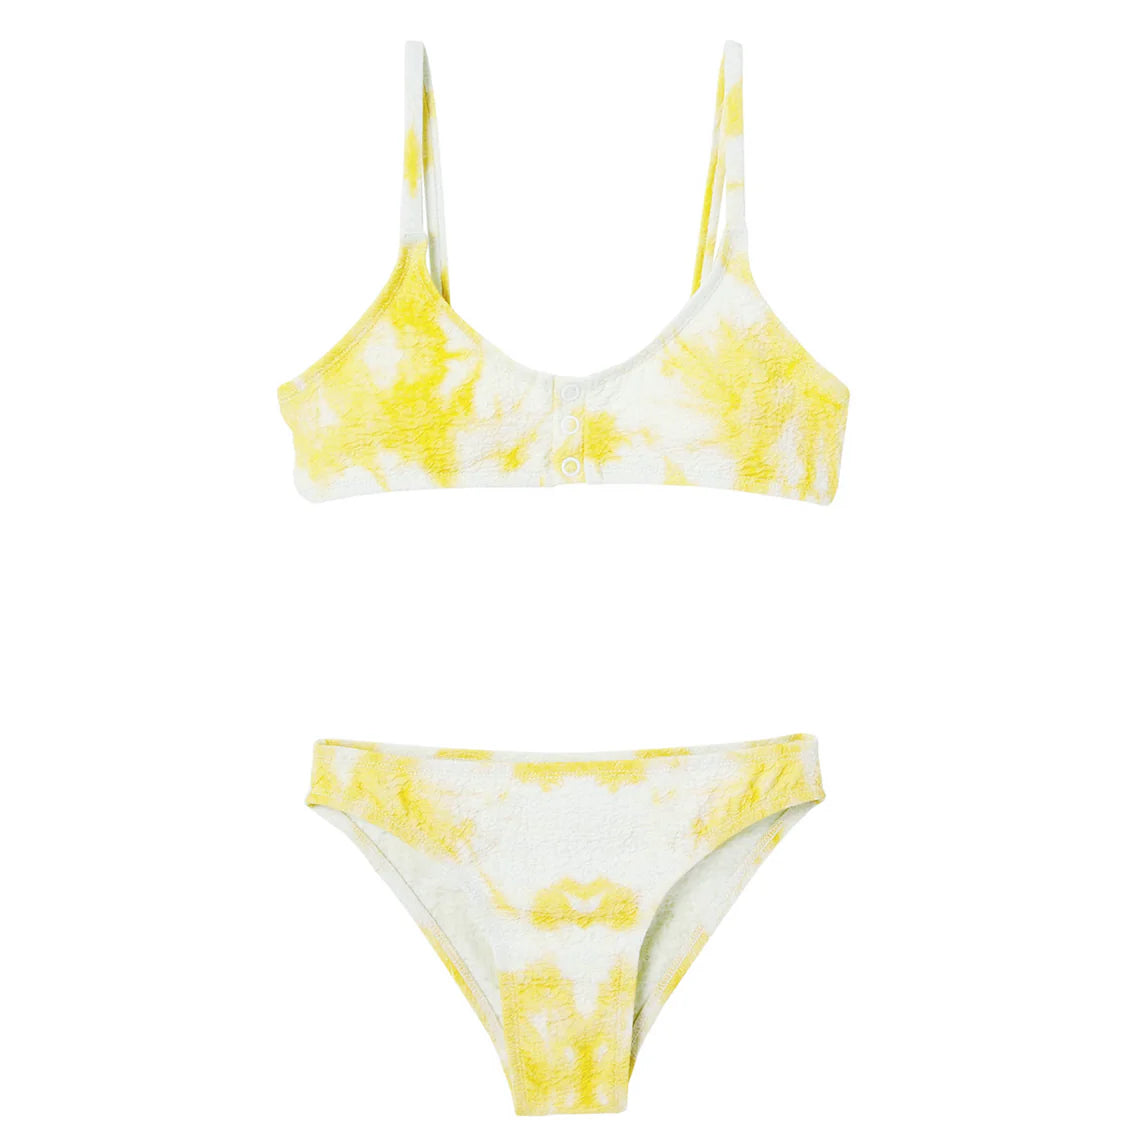 Lison Taha'a Two Pieces Swimsuit - Tye Dye Yellow